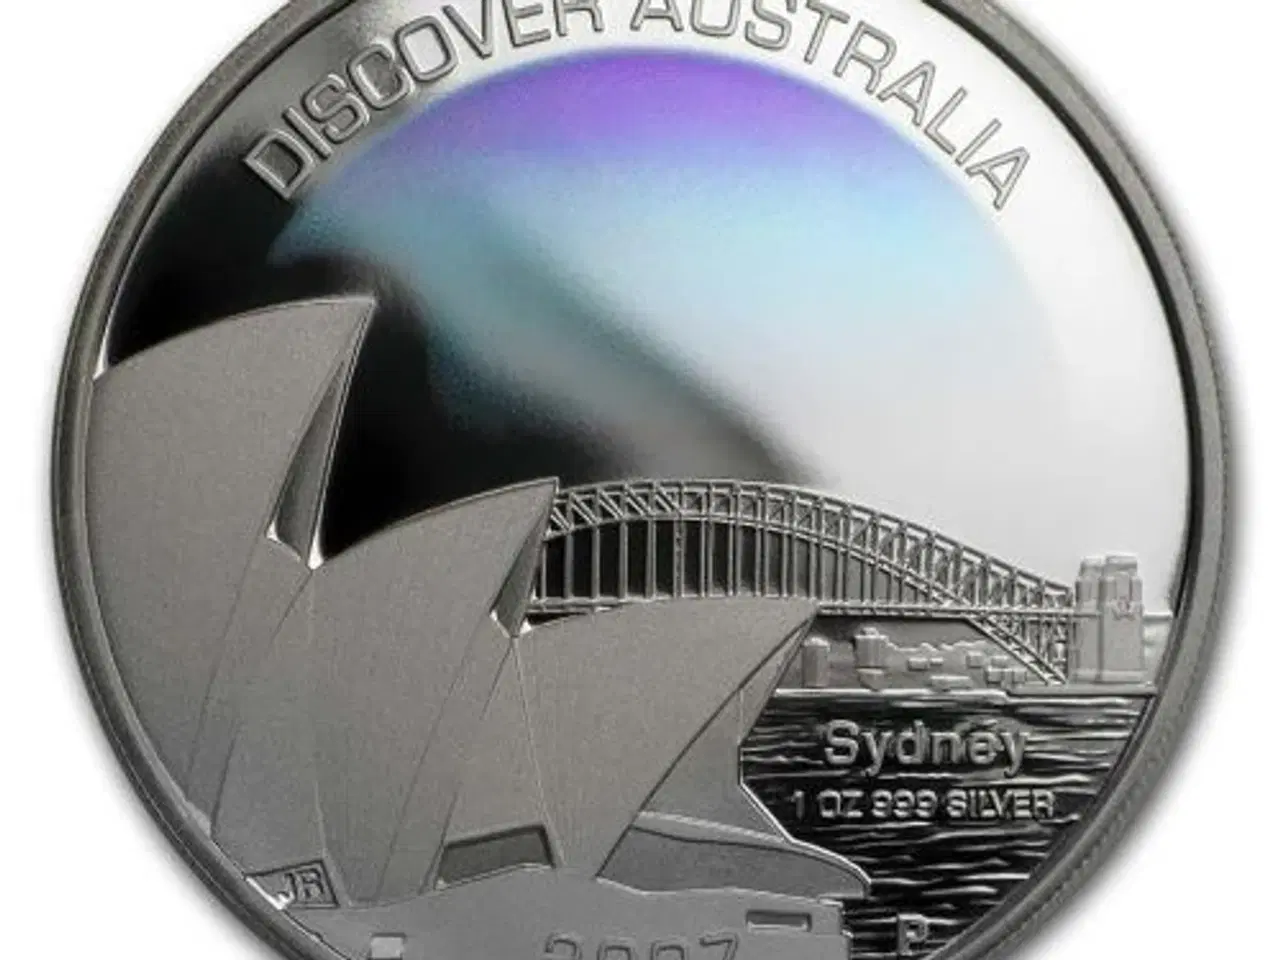 Billede 1 - Discover Australia "Sydney" 2007 sølvmønt.